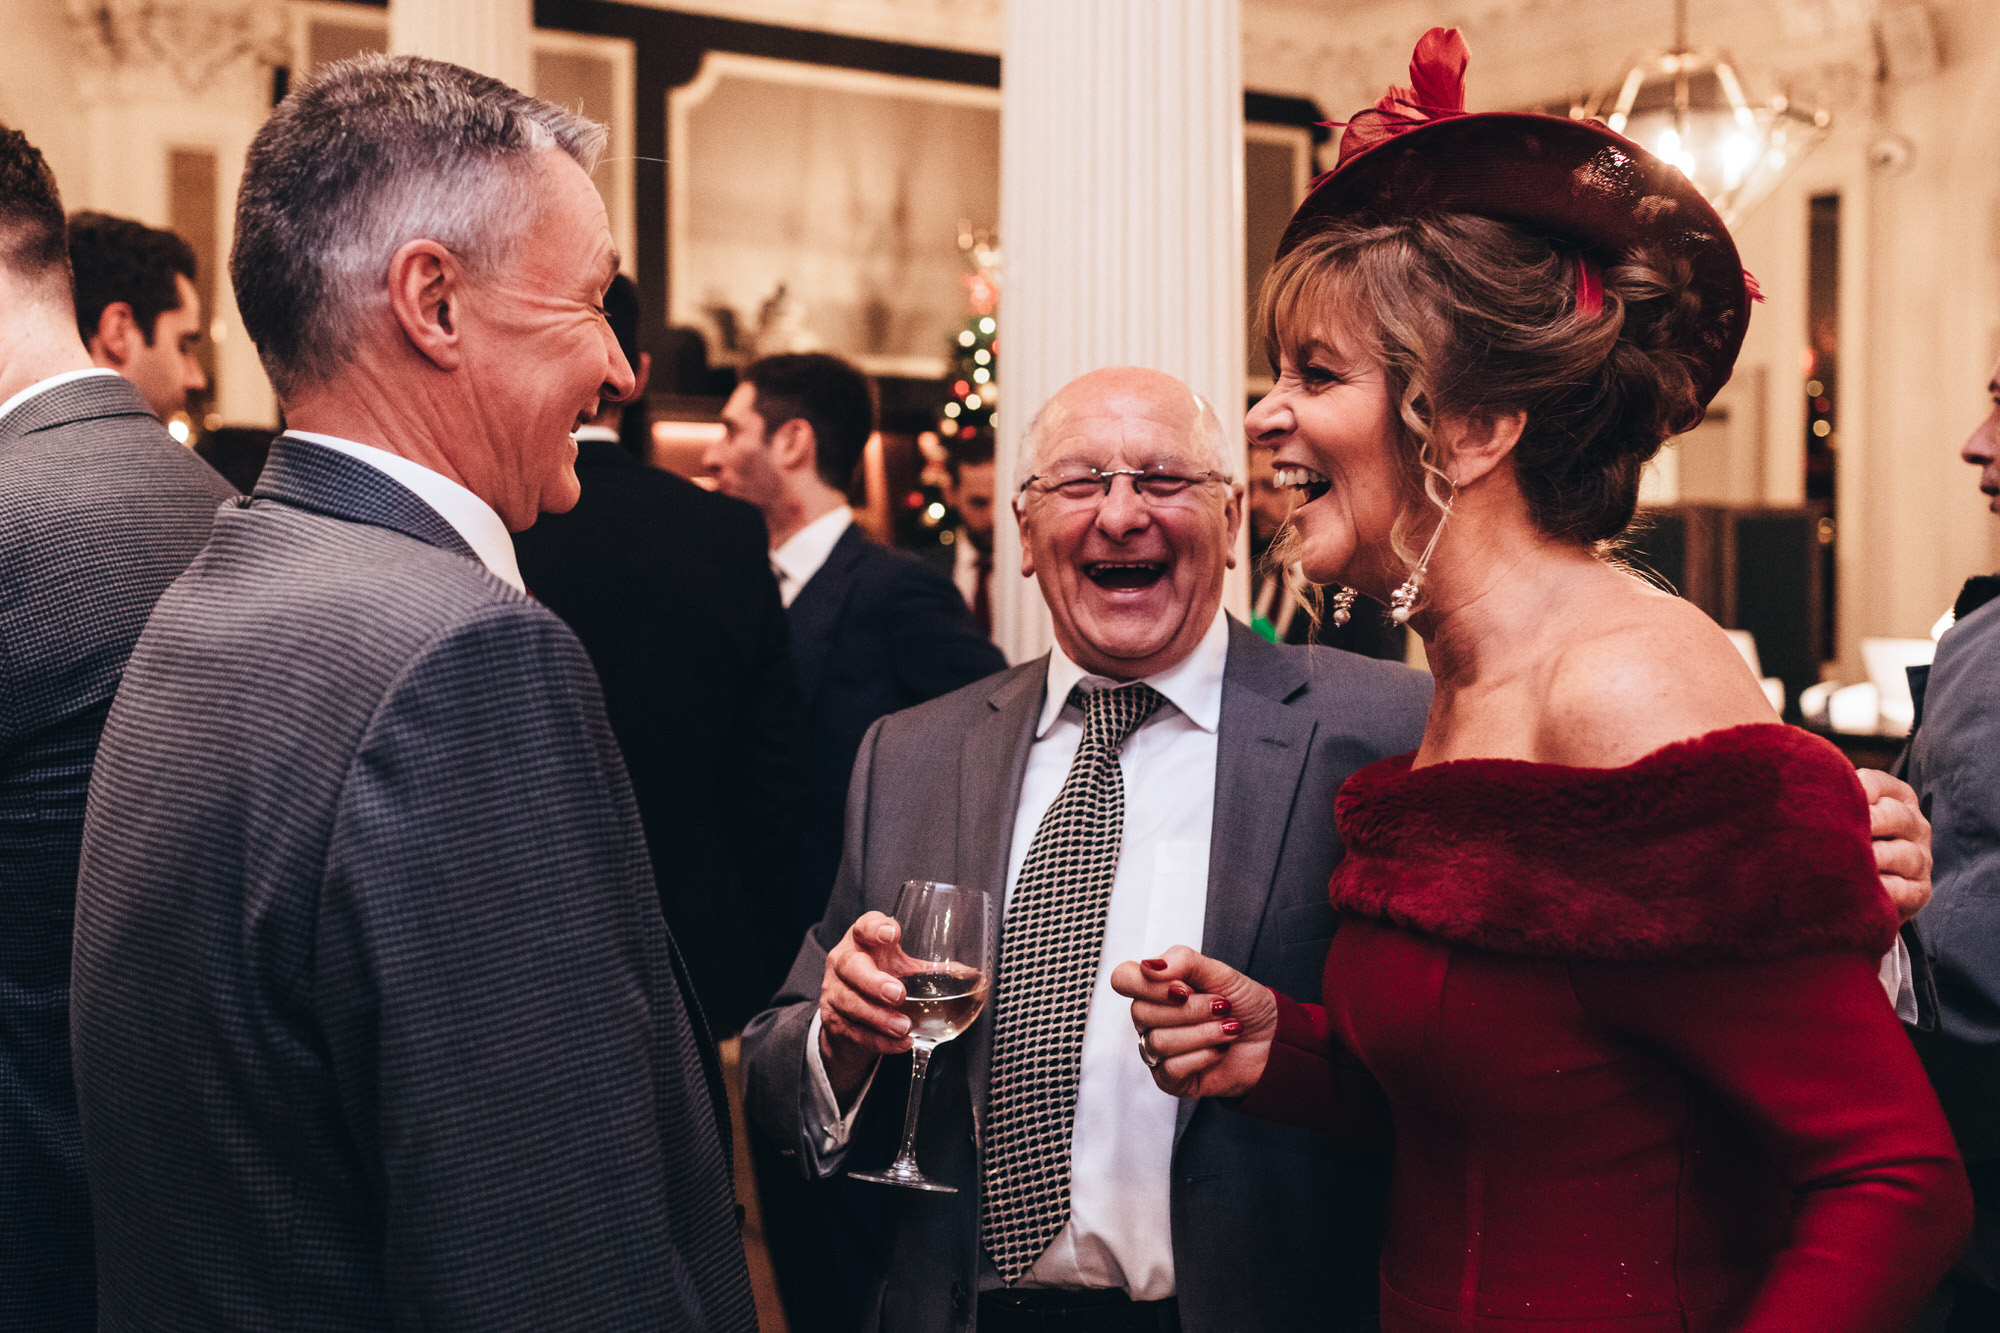 guests laugh at a wedding reception